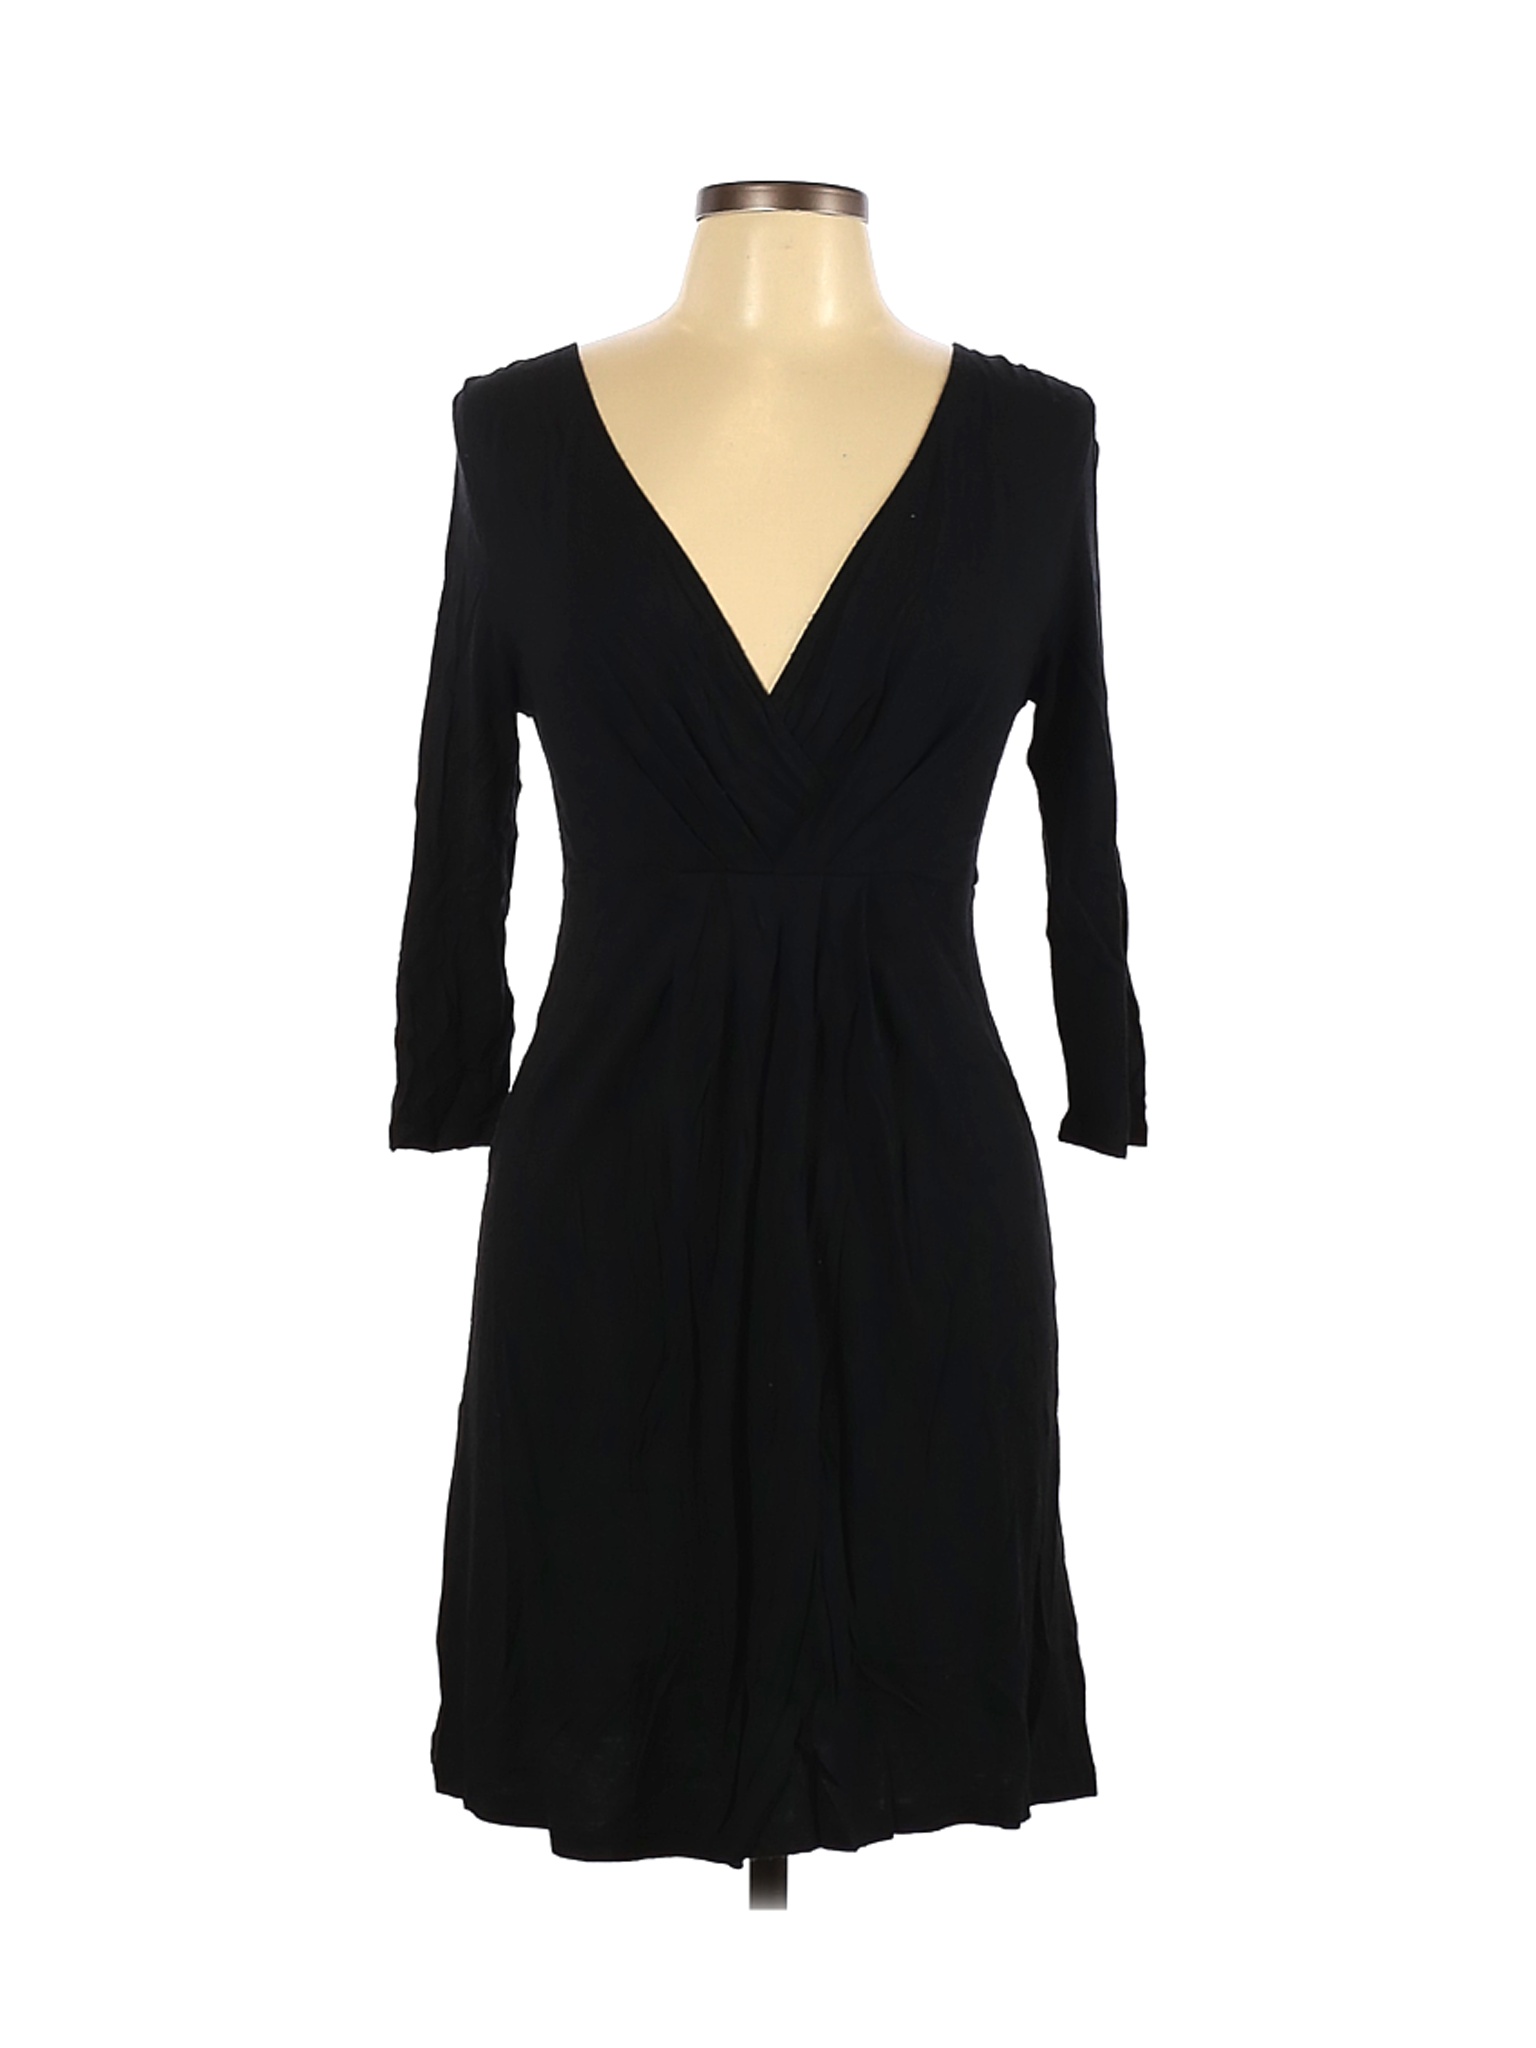 Old Navy Women Black Cocktail Dress M | eBay